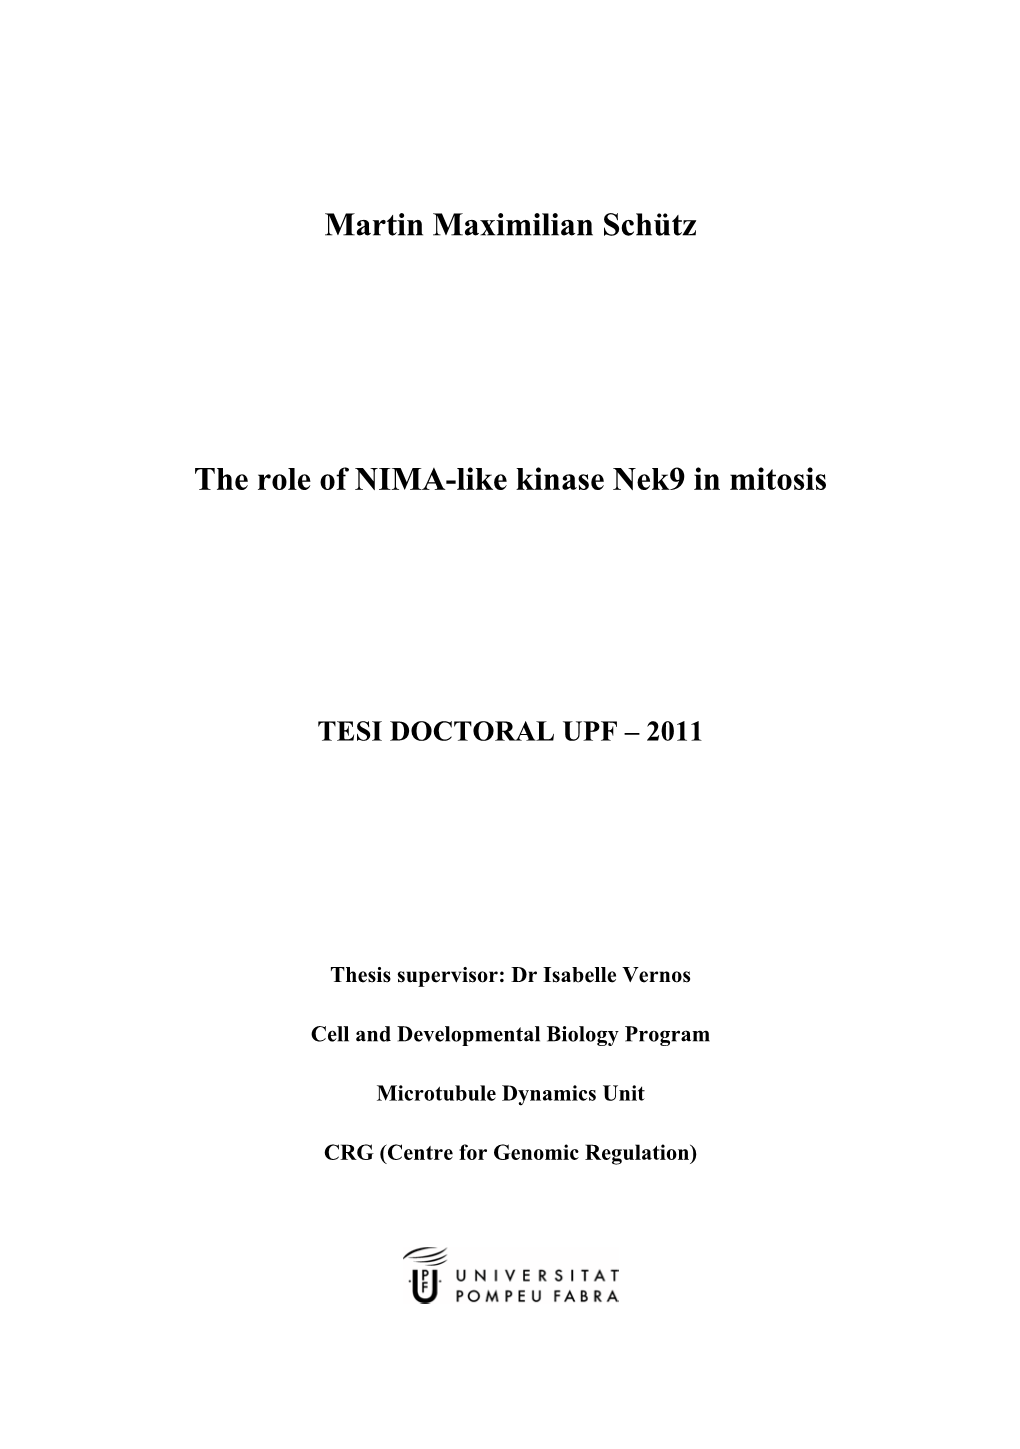 Martin Maximilian Schütz the Role of NIMA-Like Kinase Nek9 in Mitosis